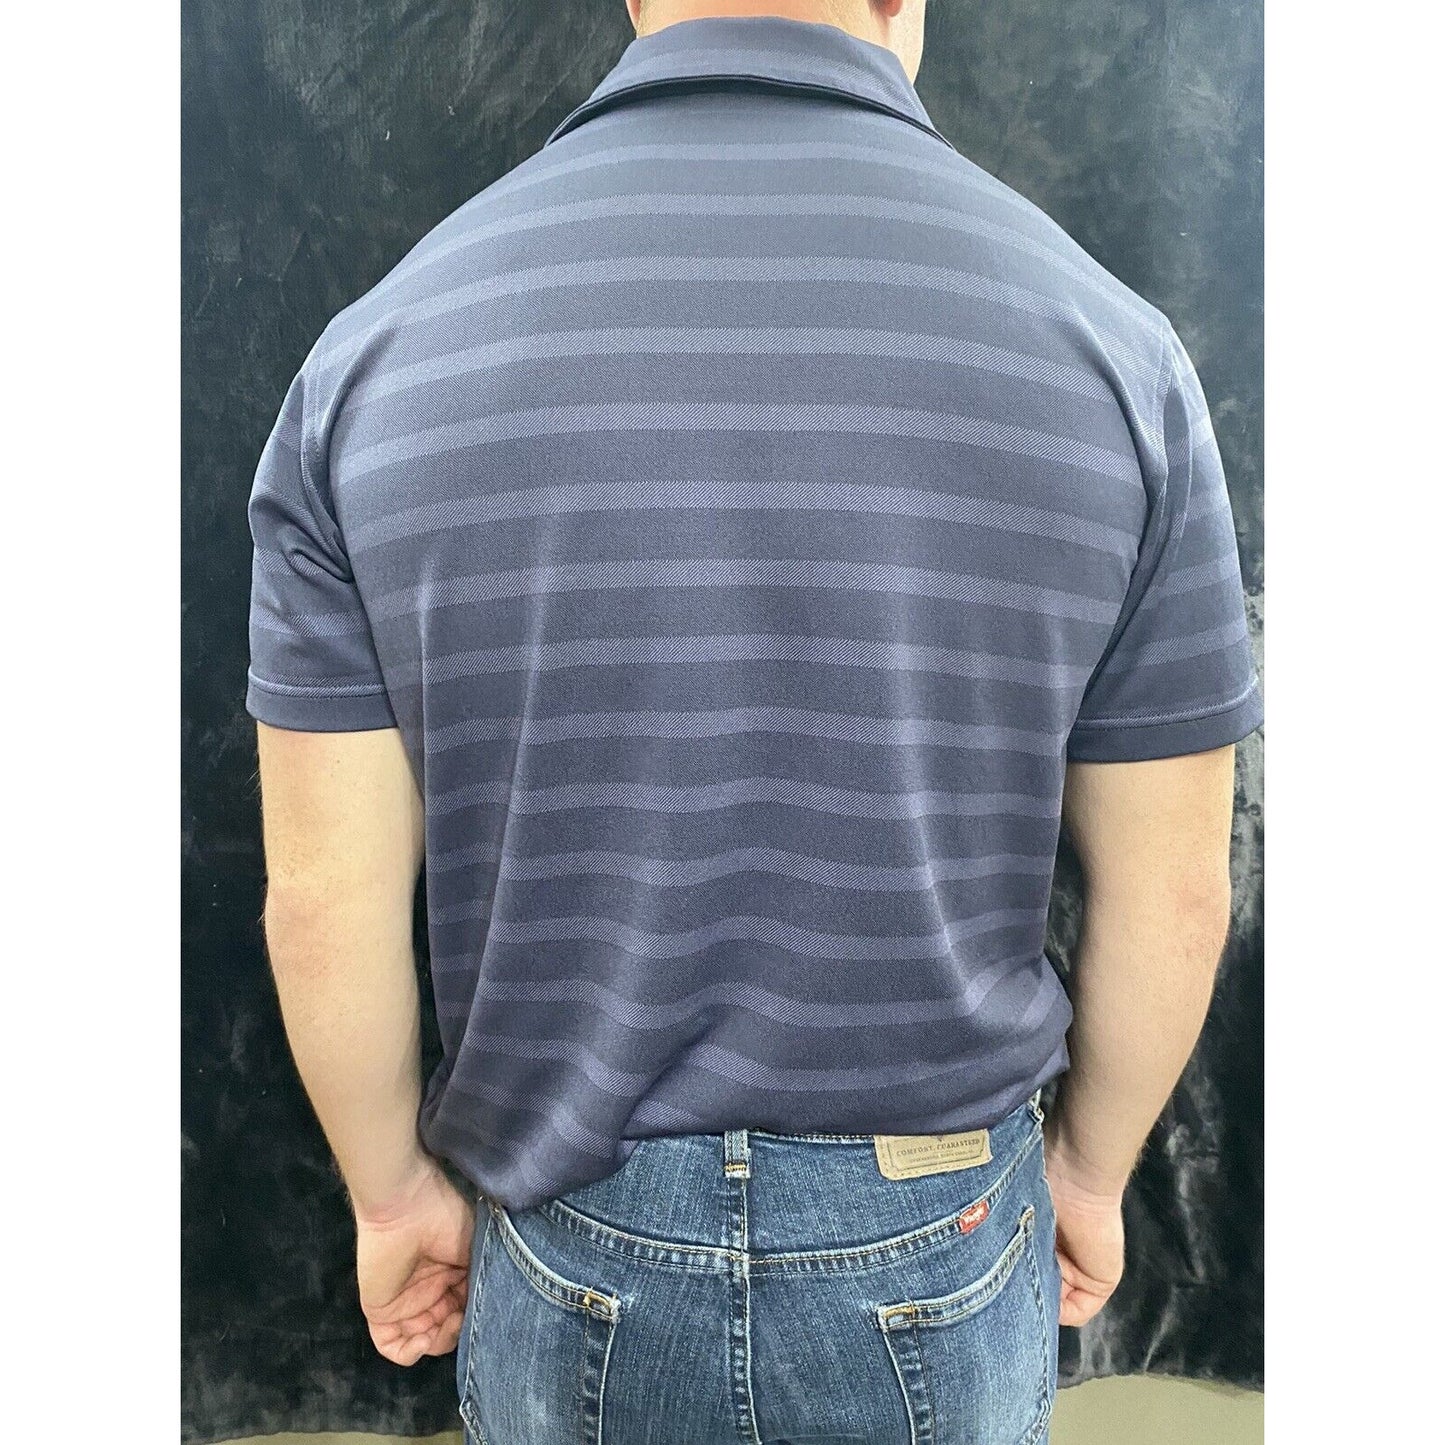 BOLLE Men’s Medium Purple Stripes Short Sleeves Performance Polo Shirt